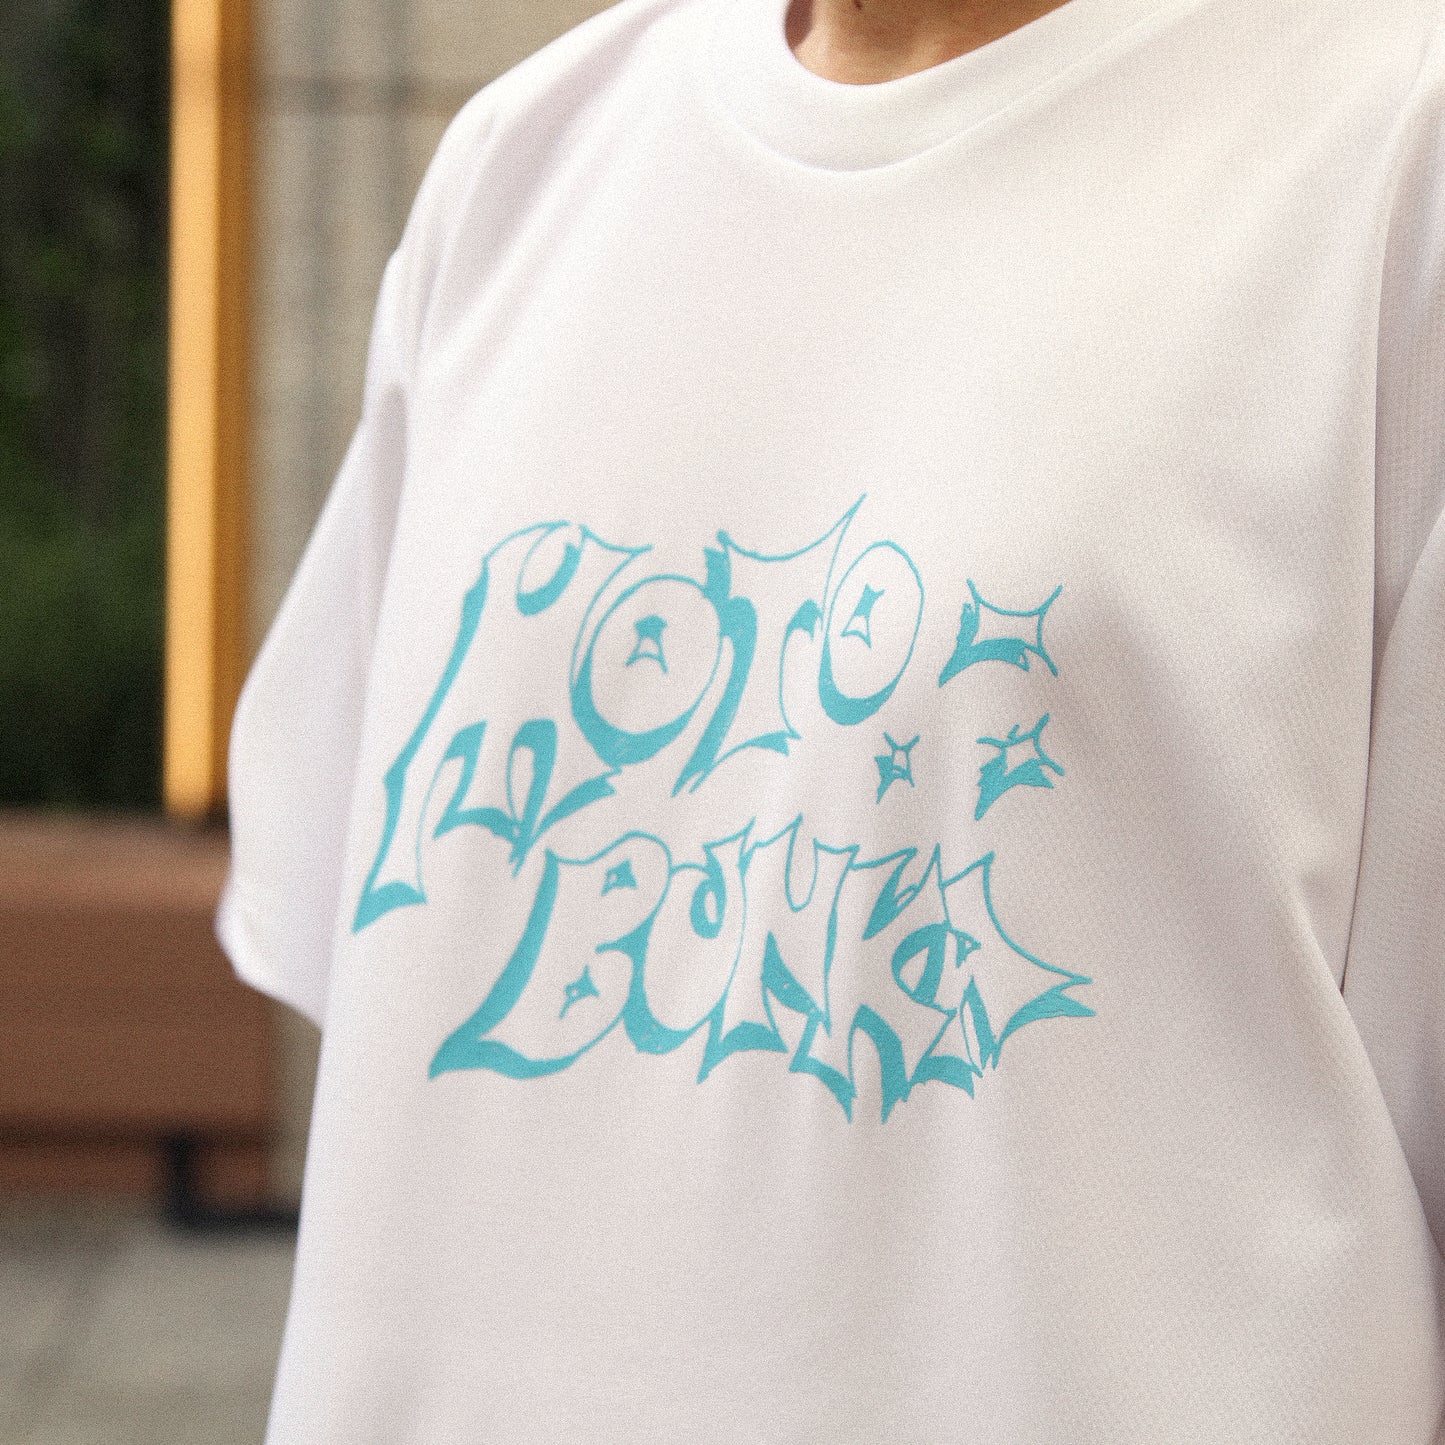 MOTO-BUNKA - Summer Logo Dry Tech T-Shirt/White